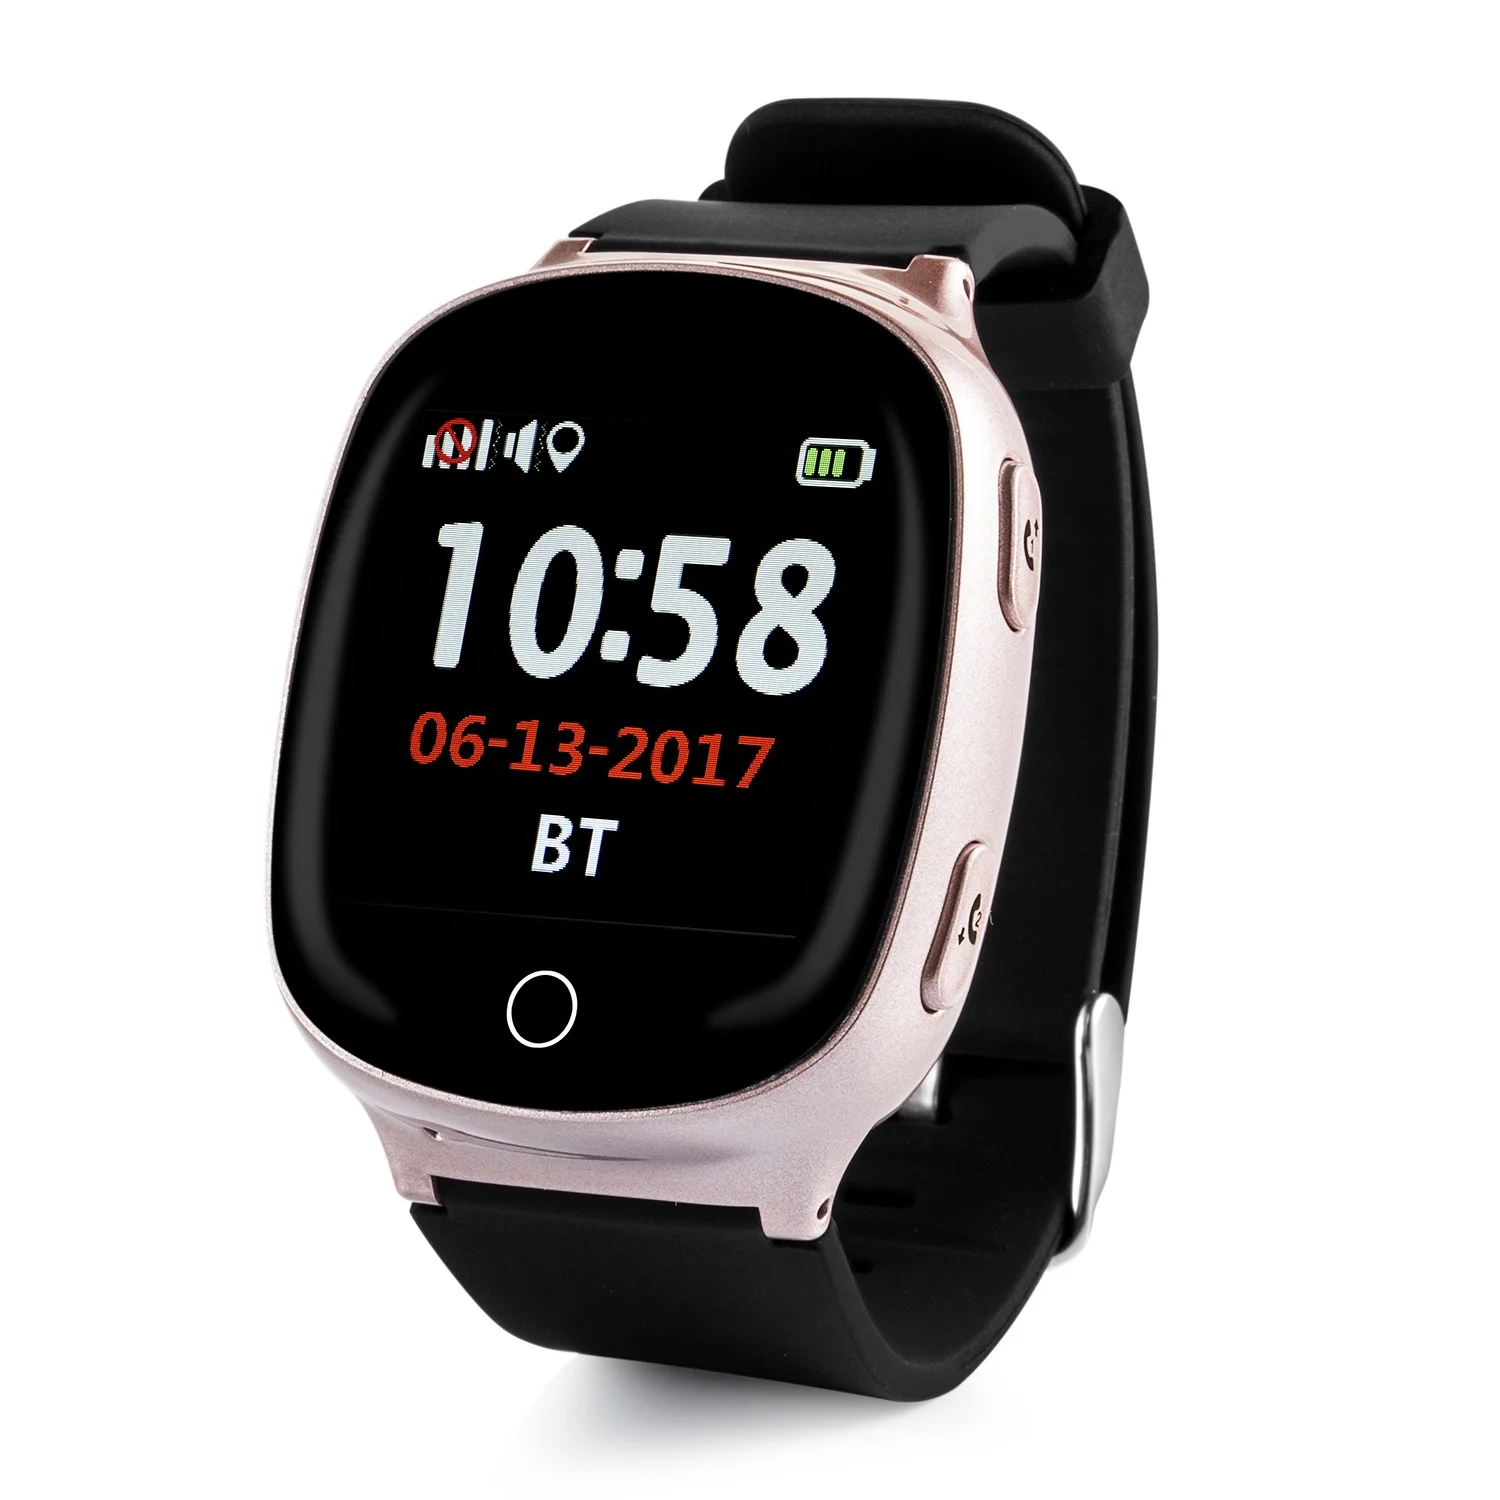 Wonlex 2019 Factory OEM D100 Smart Tracking WIFI Locator Elderly GPS Watch Phone